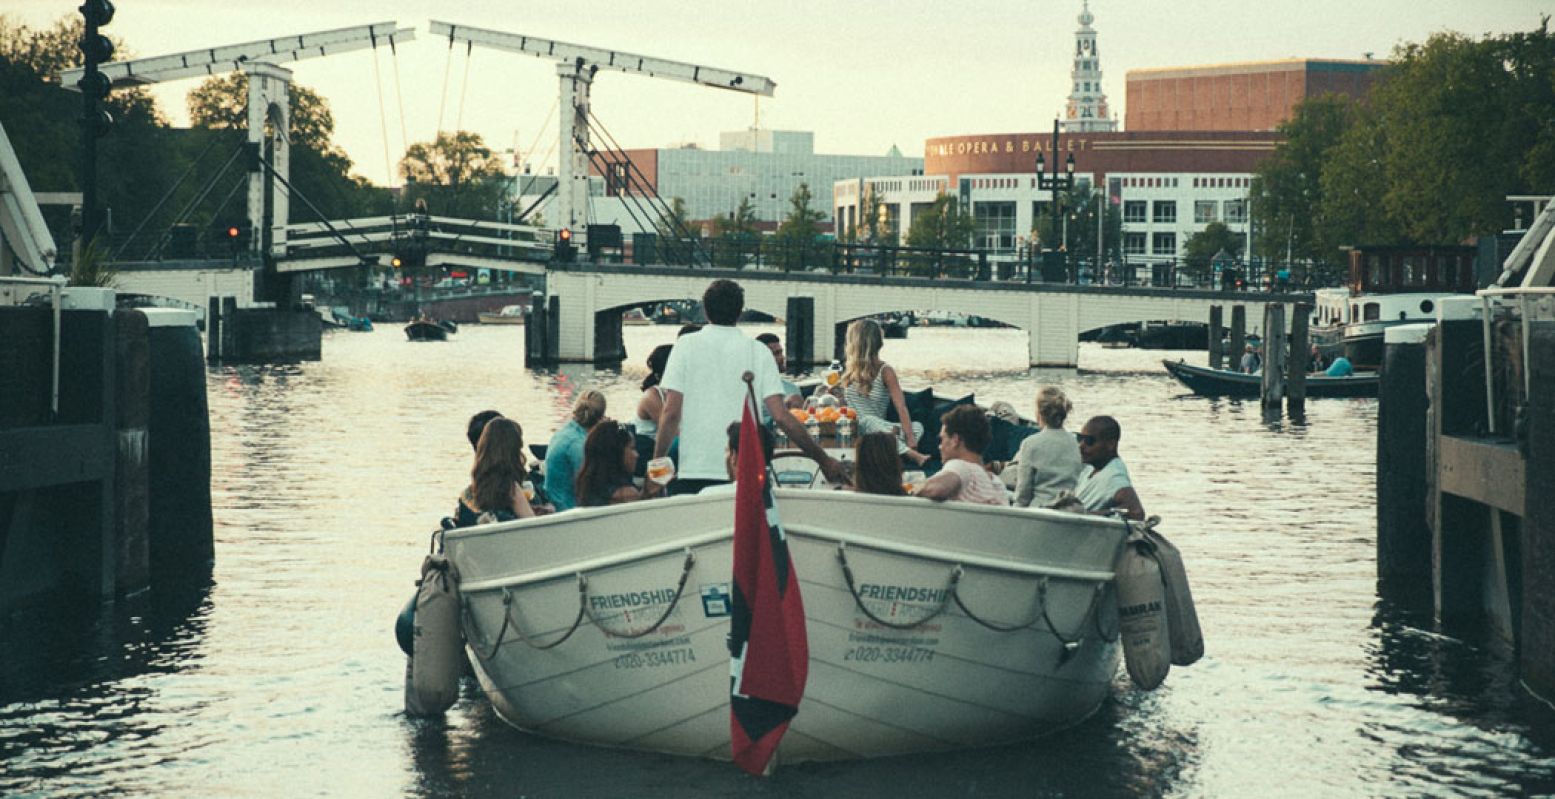 Boek een privéboot van Friendship. Foto: Friendship Amsterdam